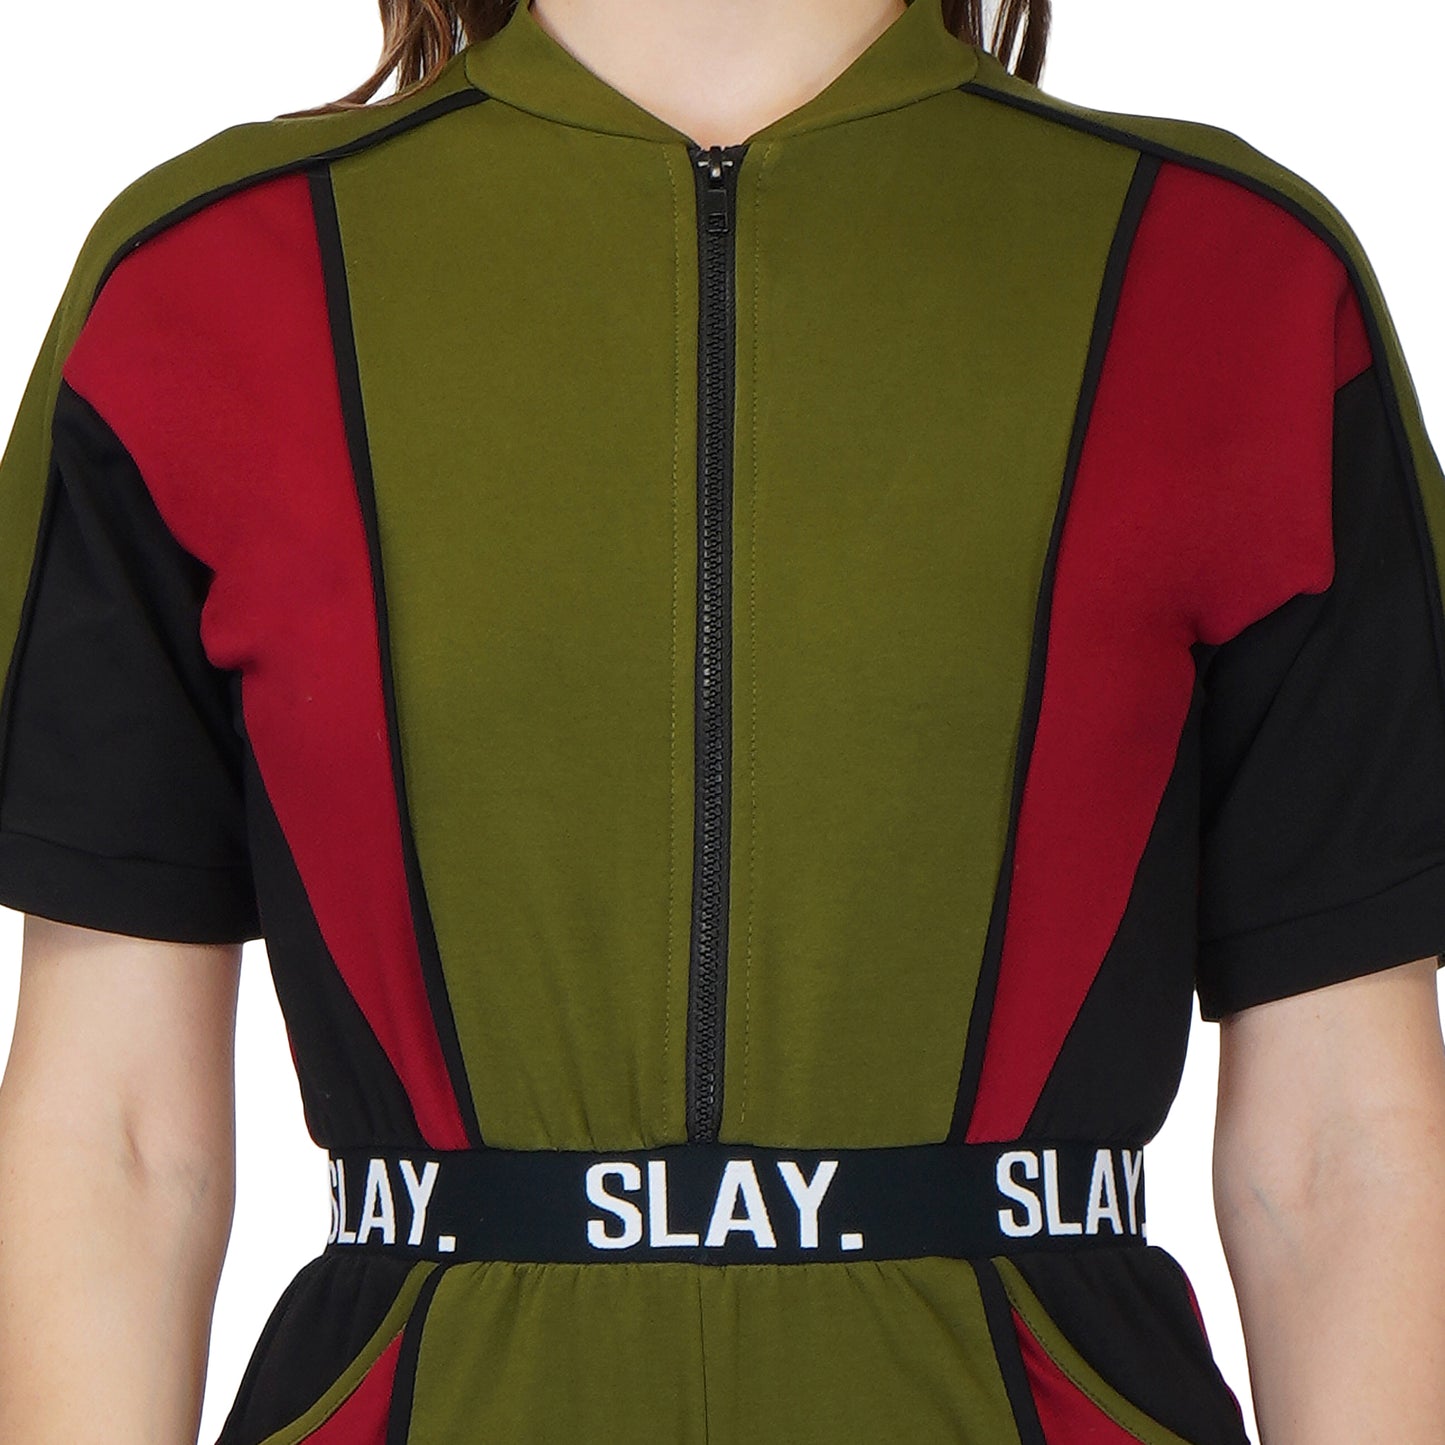 SLAY. Women's Colorblock Romper Olive Green Red Black